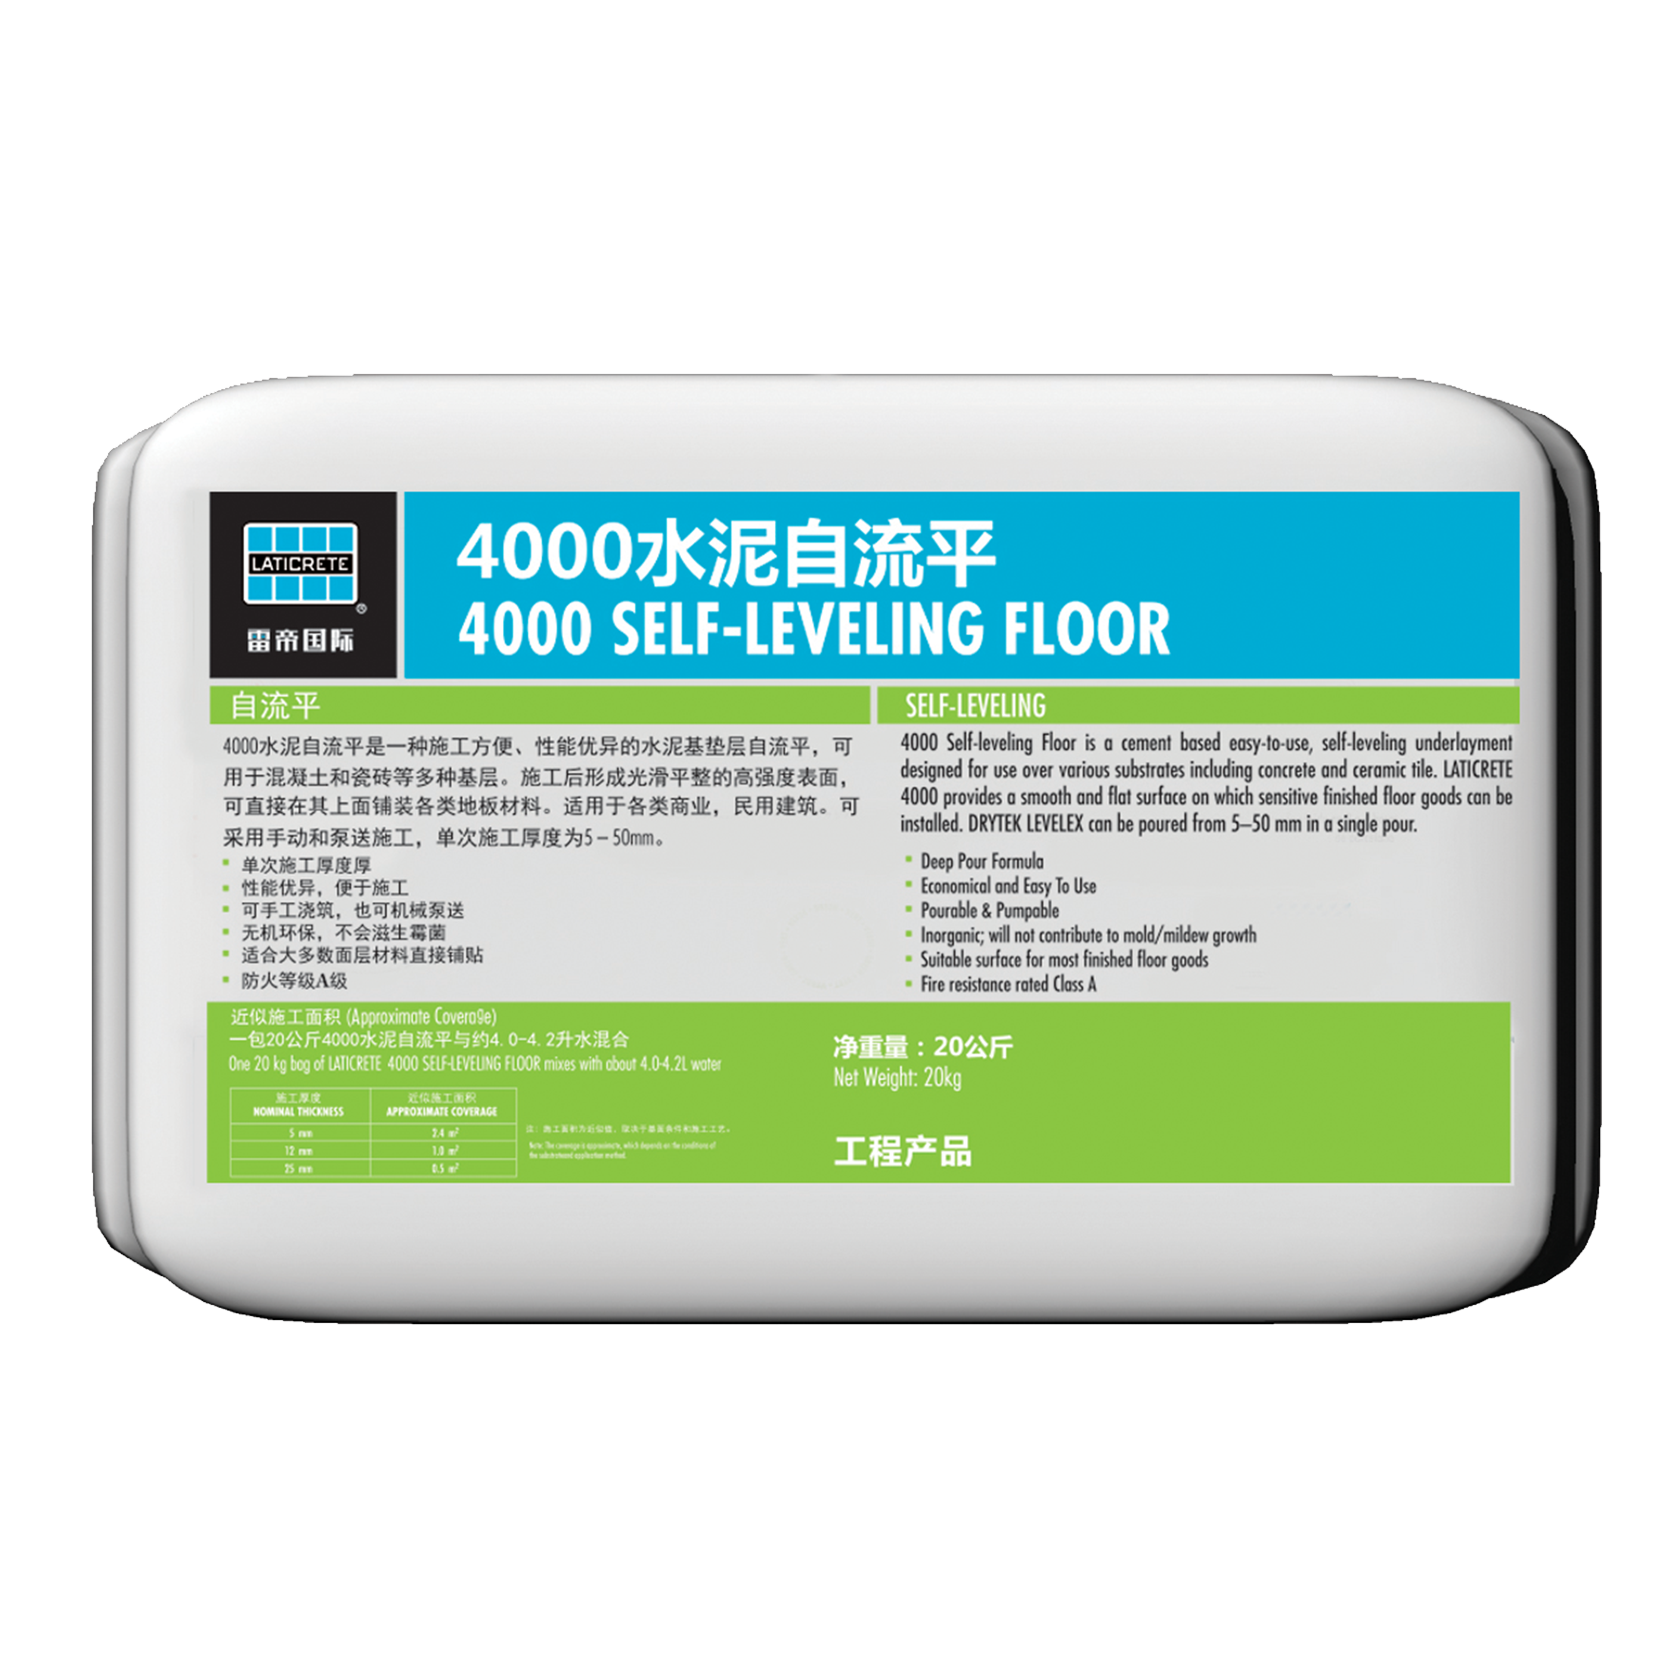 LATICRETE 4000 Self-leveling Floor